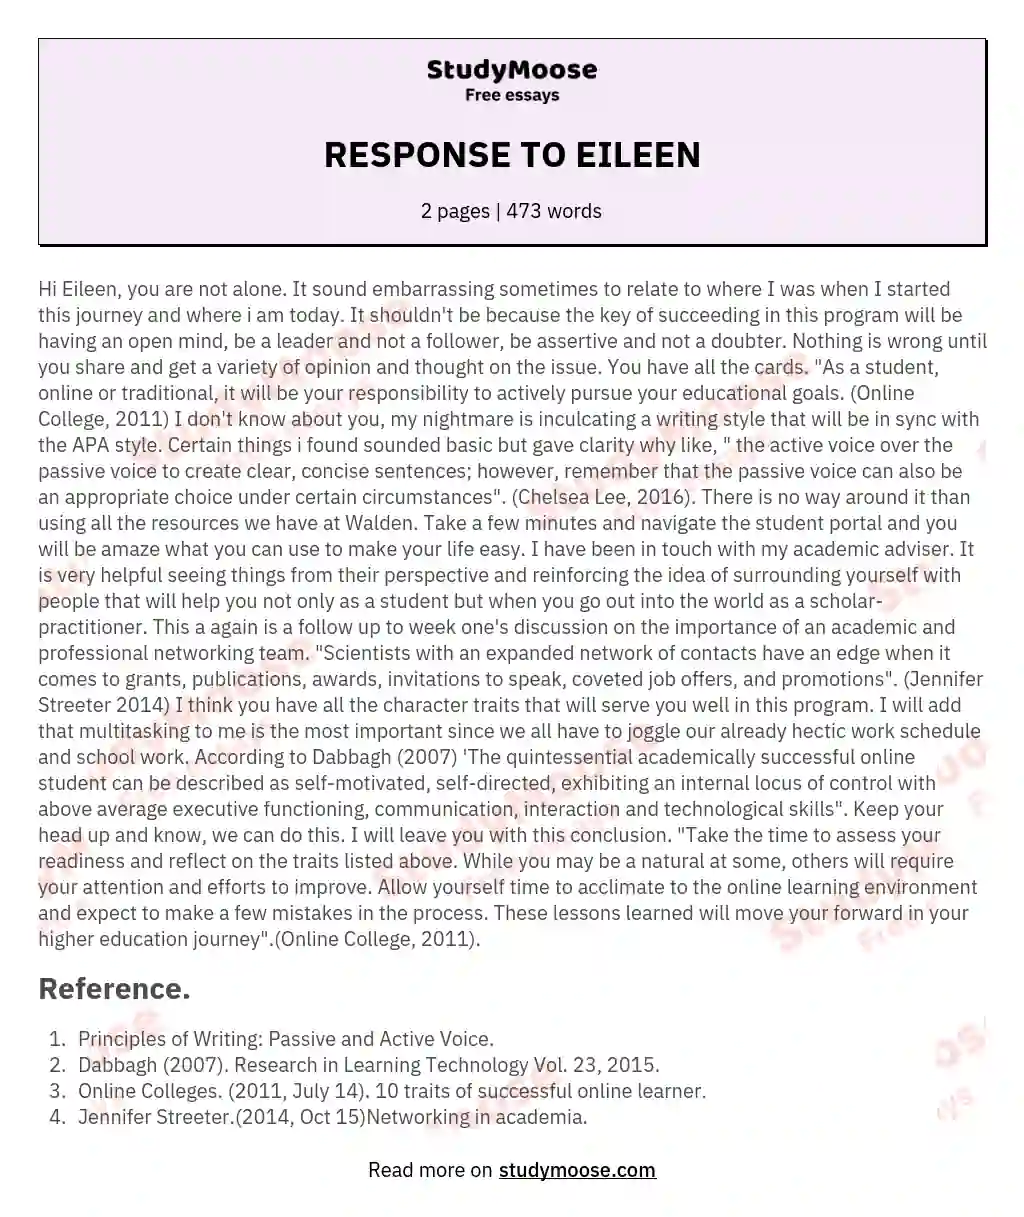 RESPONSE TO EILEEN essay